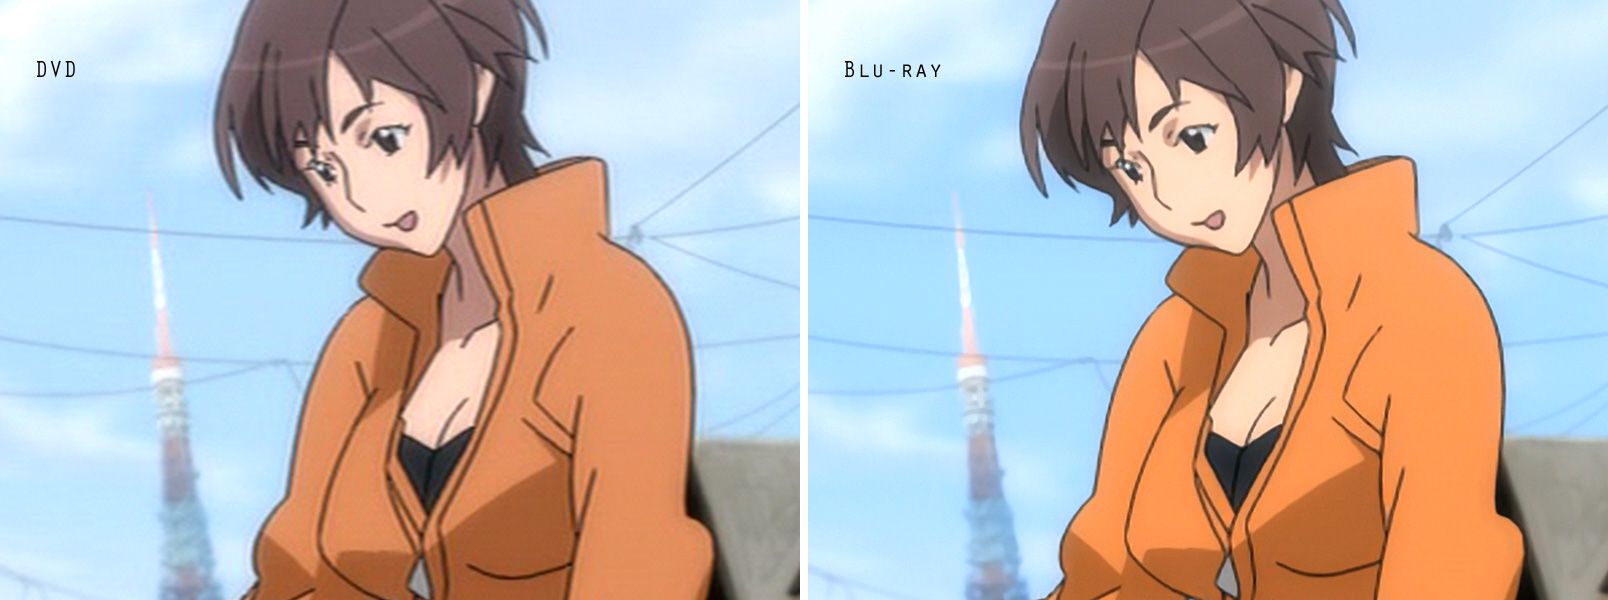 anime blu ray comparison - looklux.ru.